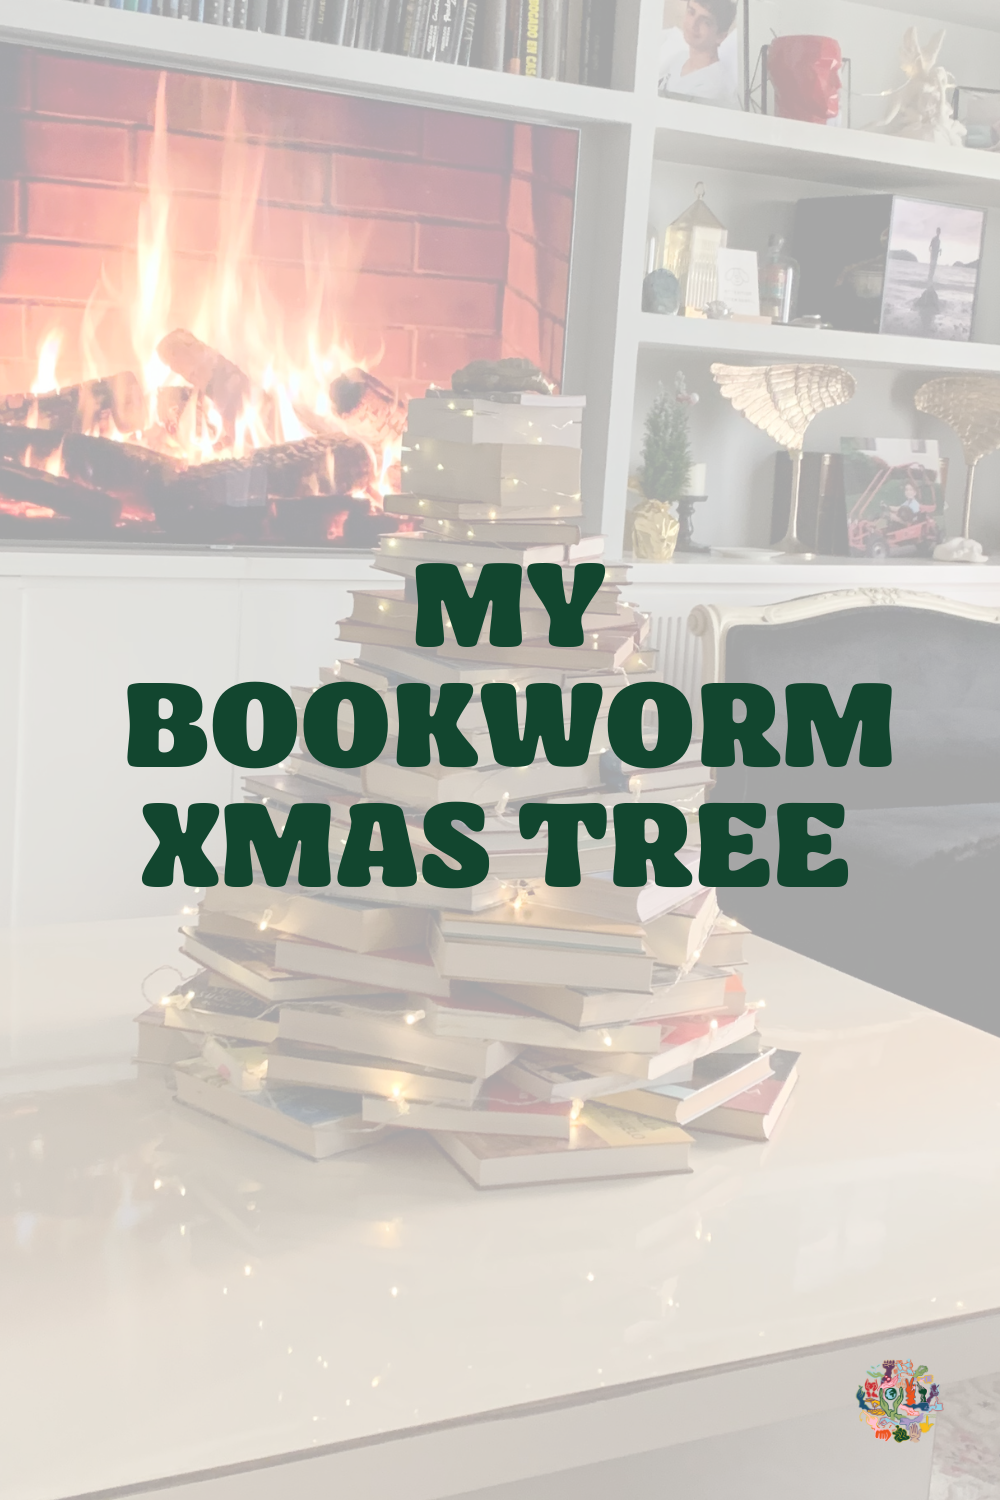 My Bookworm Xmas Tree